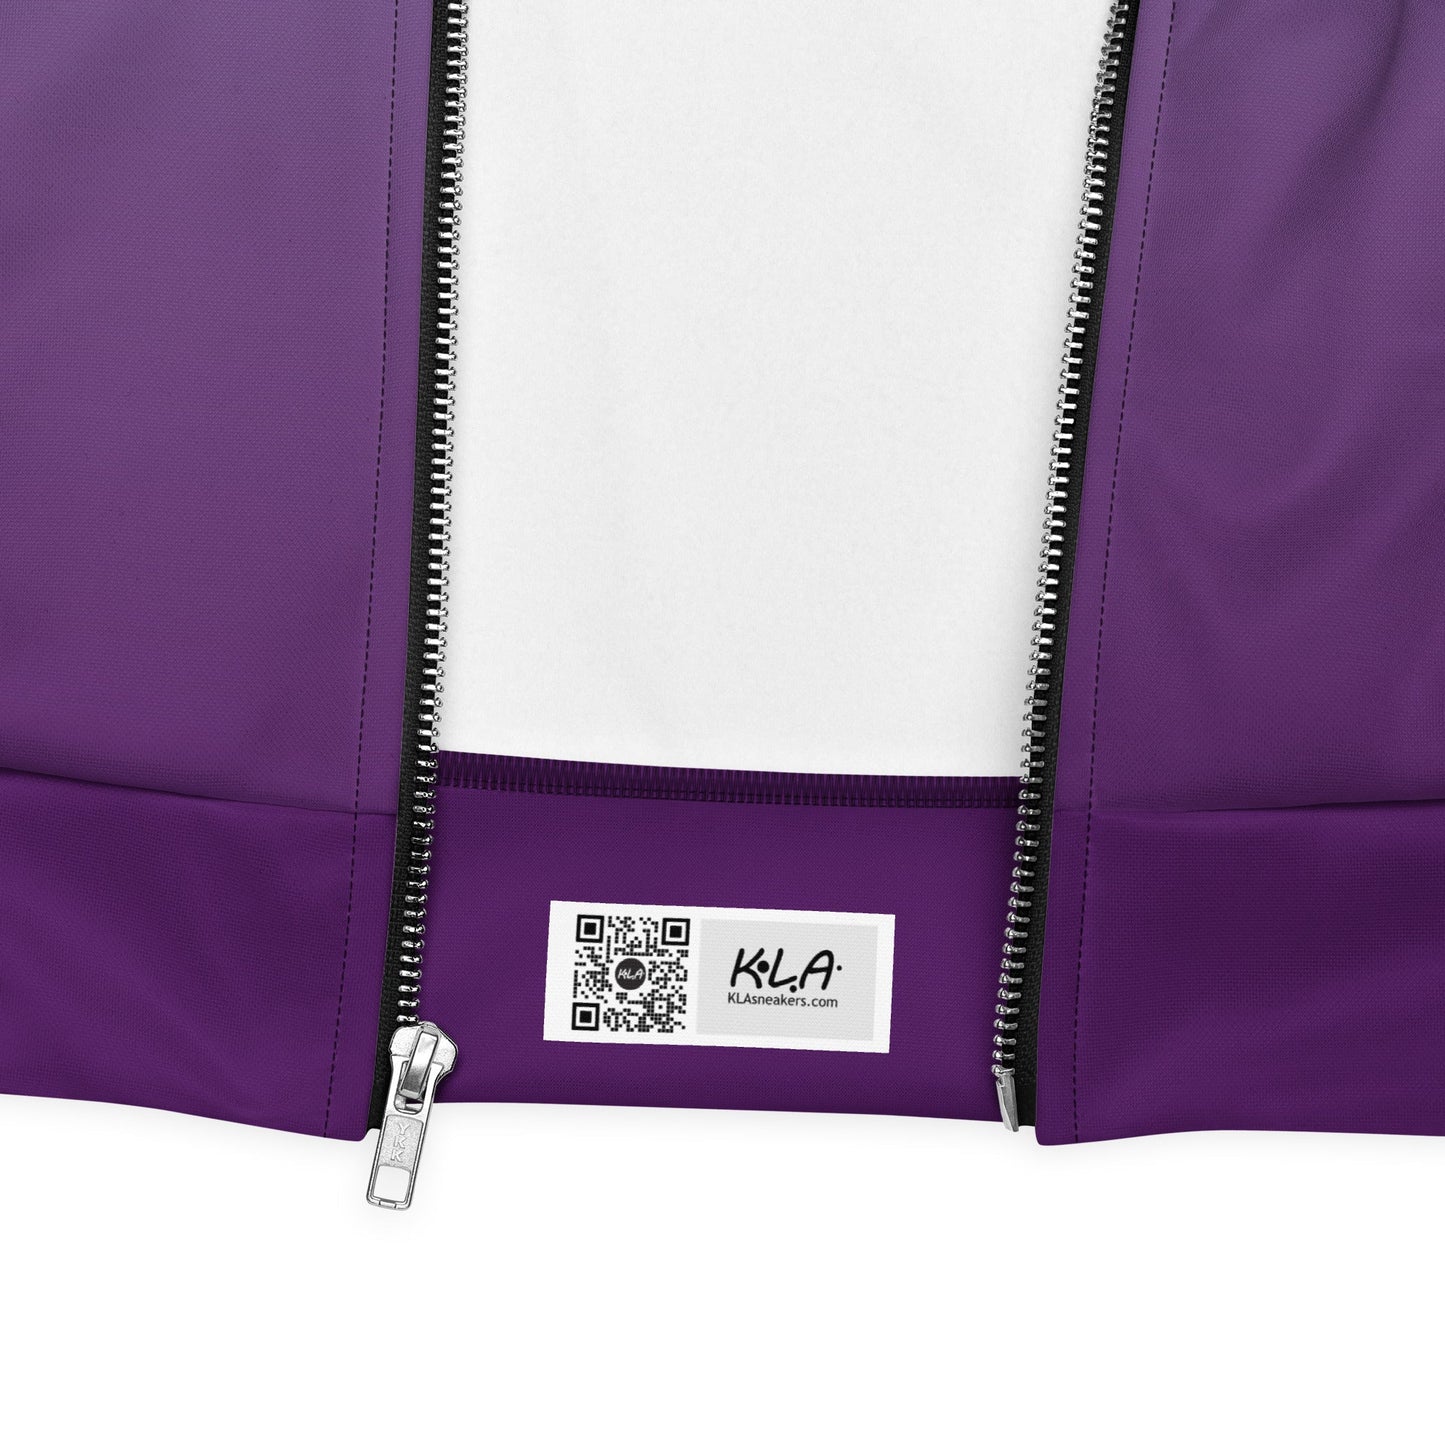 klasneakers KLA Unisex Bomber Jacket - Blue to Purple Ombre